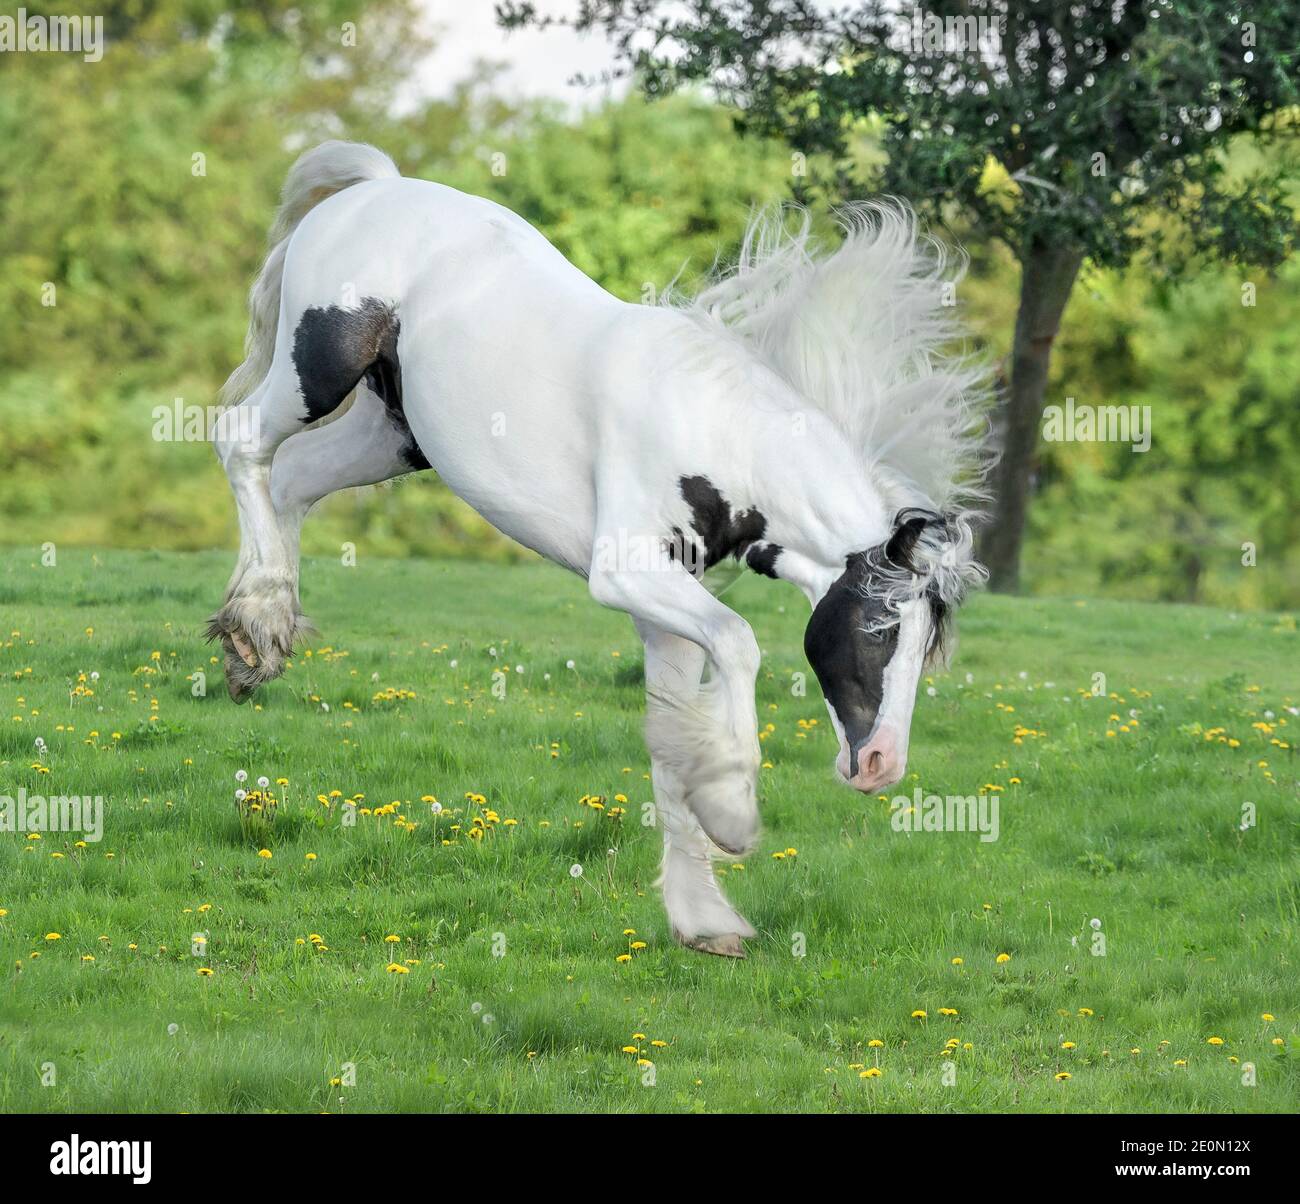 Gypsy Horse yearling colt bucks and kicks in play Stock Photo